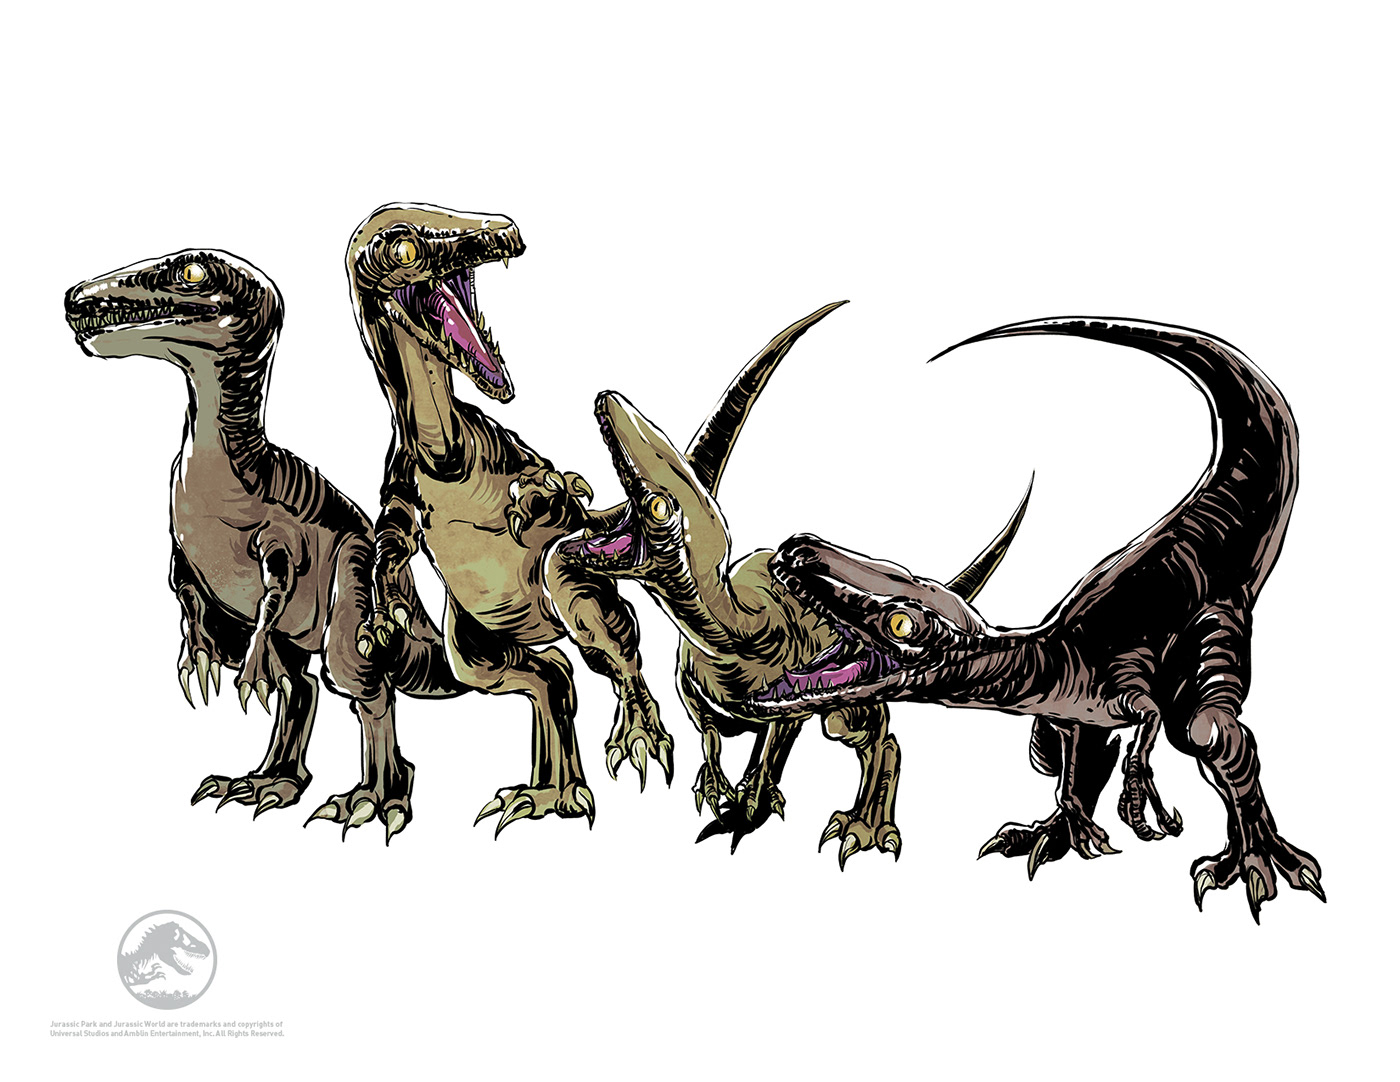 Jurassic World jurassic park dinosaurs Style Guide character art t-rex raptors Fallen Kingdom